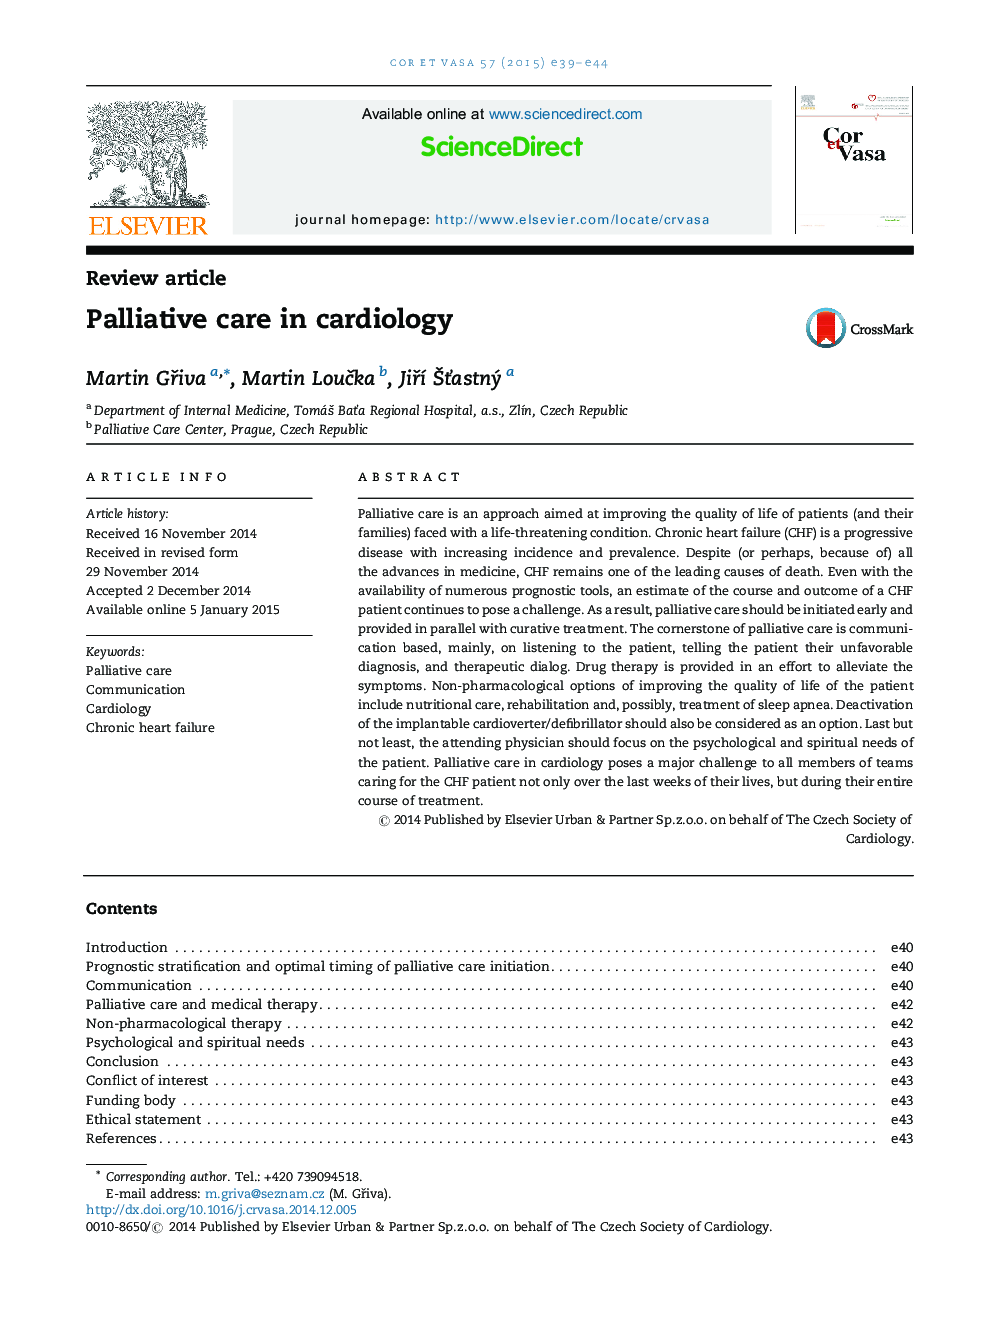 Palliative care in cardiology